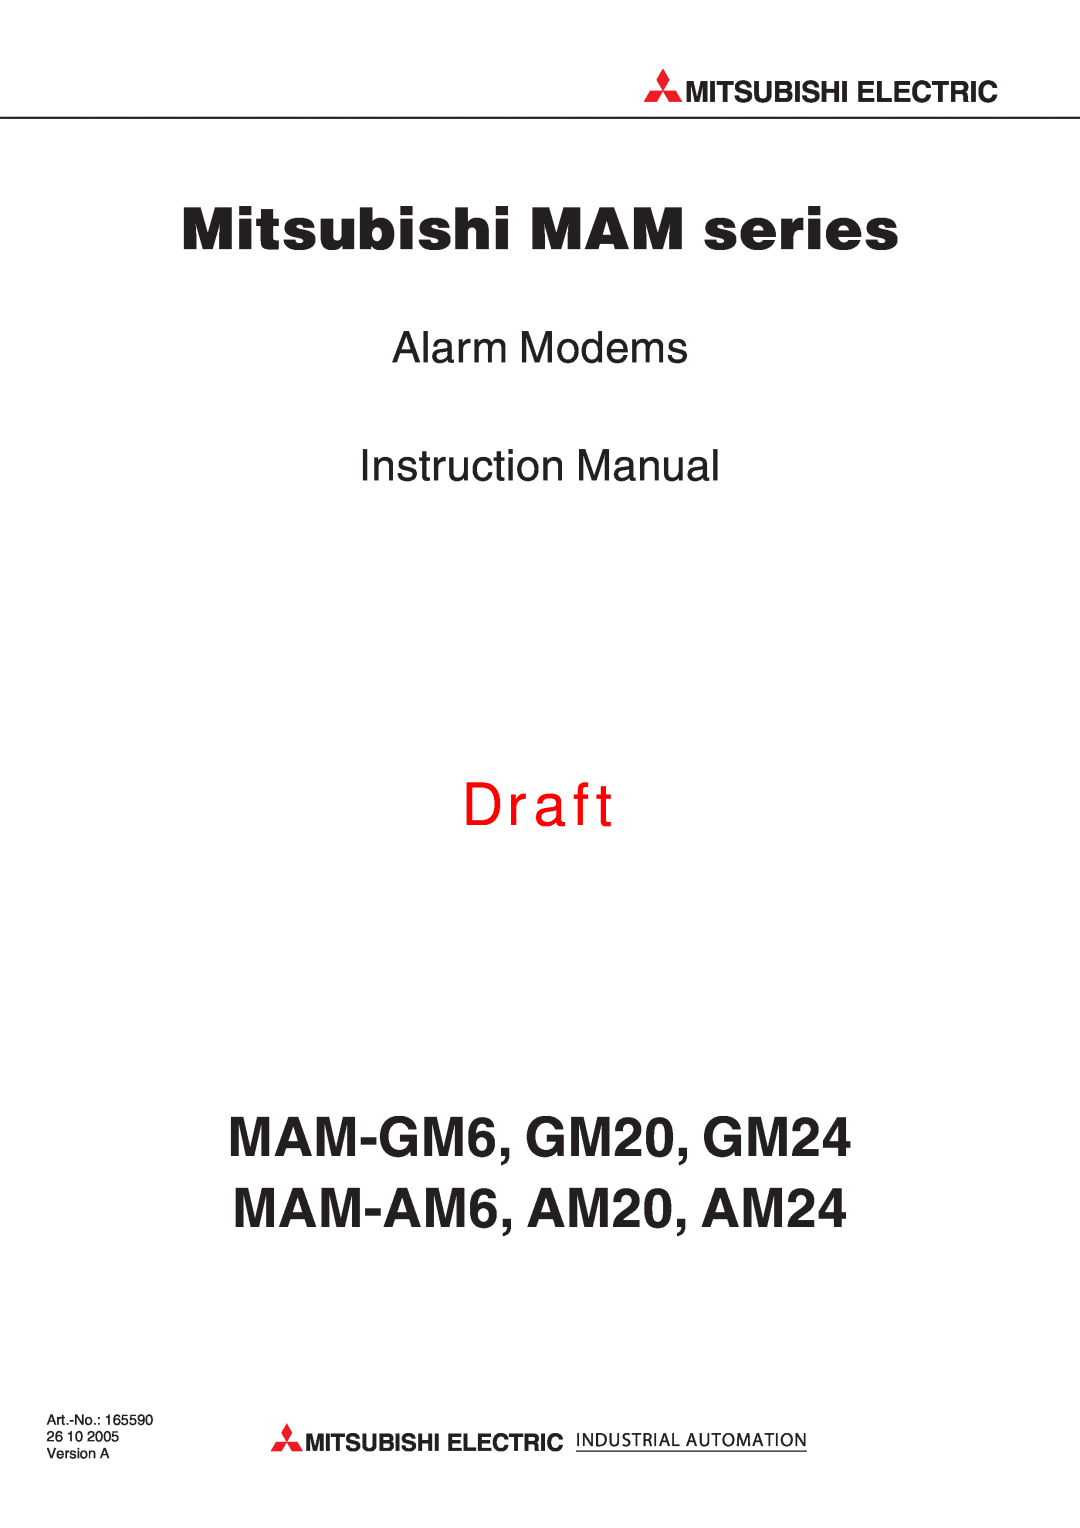 Mitsubishi Electronics MAM-GM20 instruction manual Mitsubishi Electric Industrial Automation, Mitsubishi MAM series 